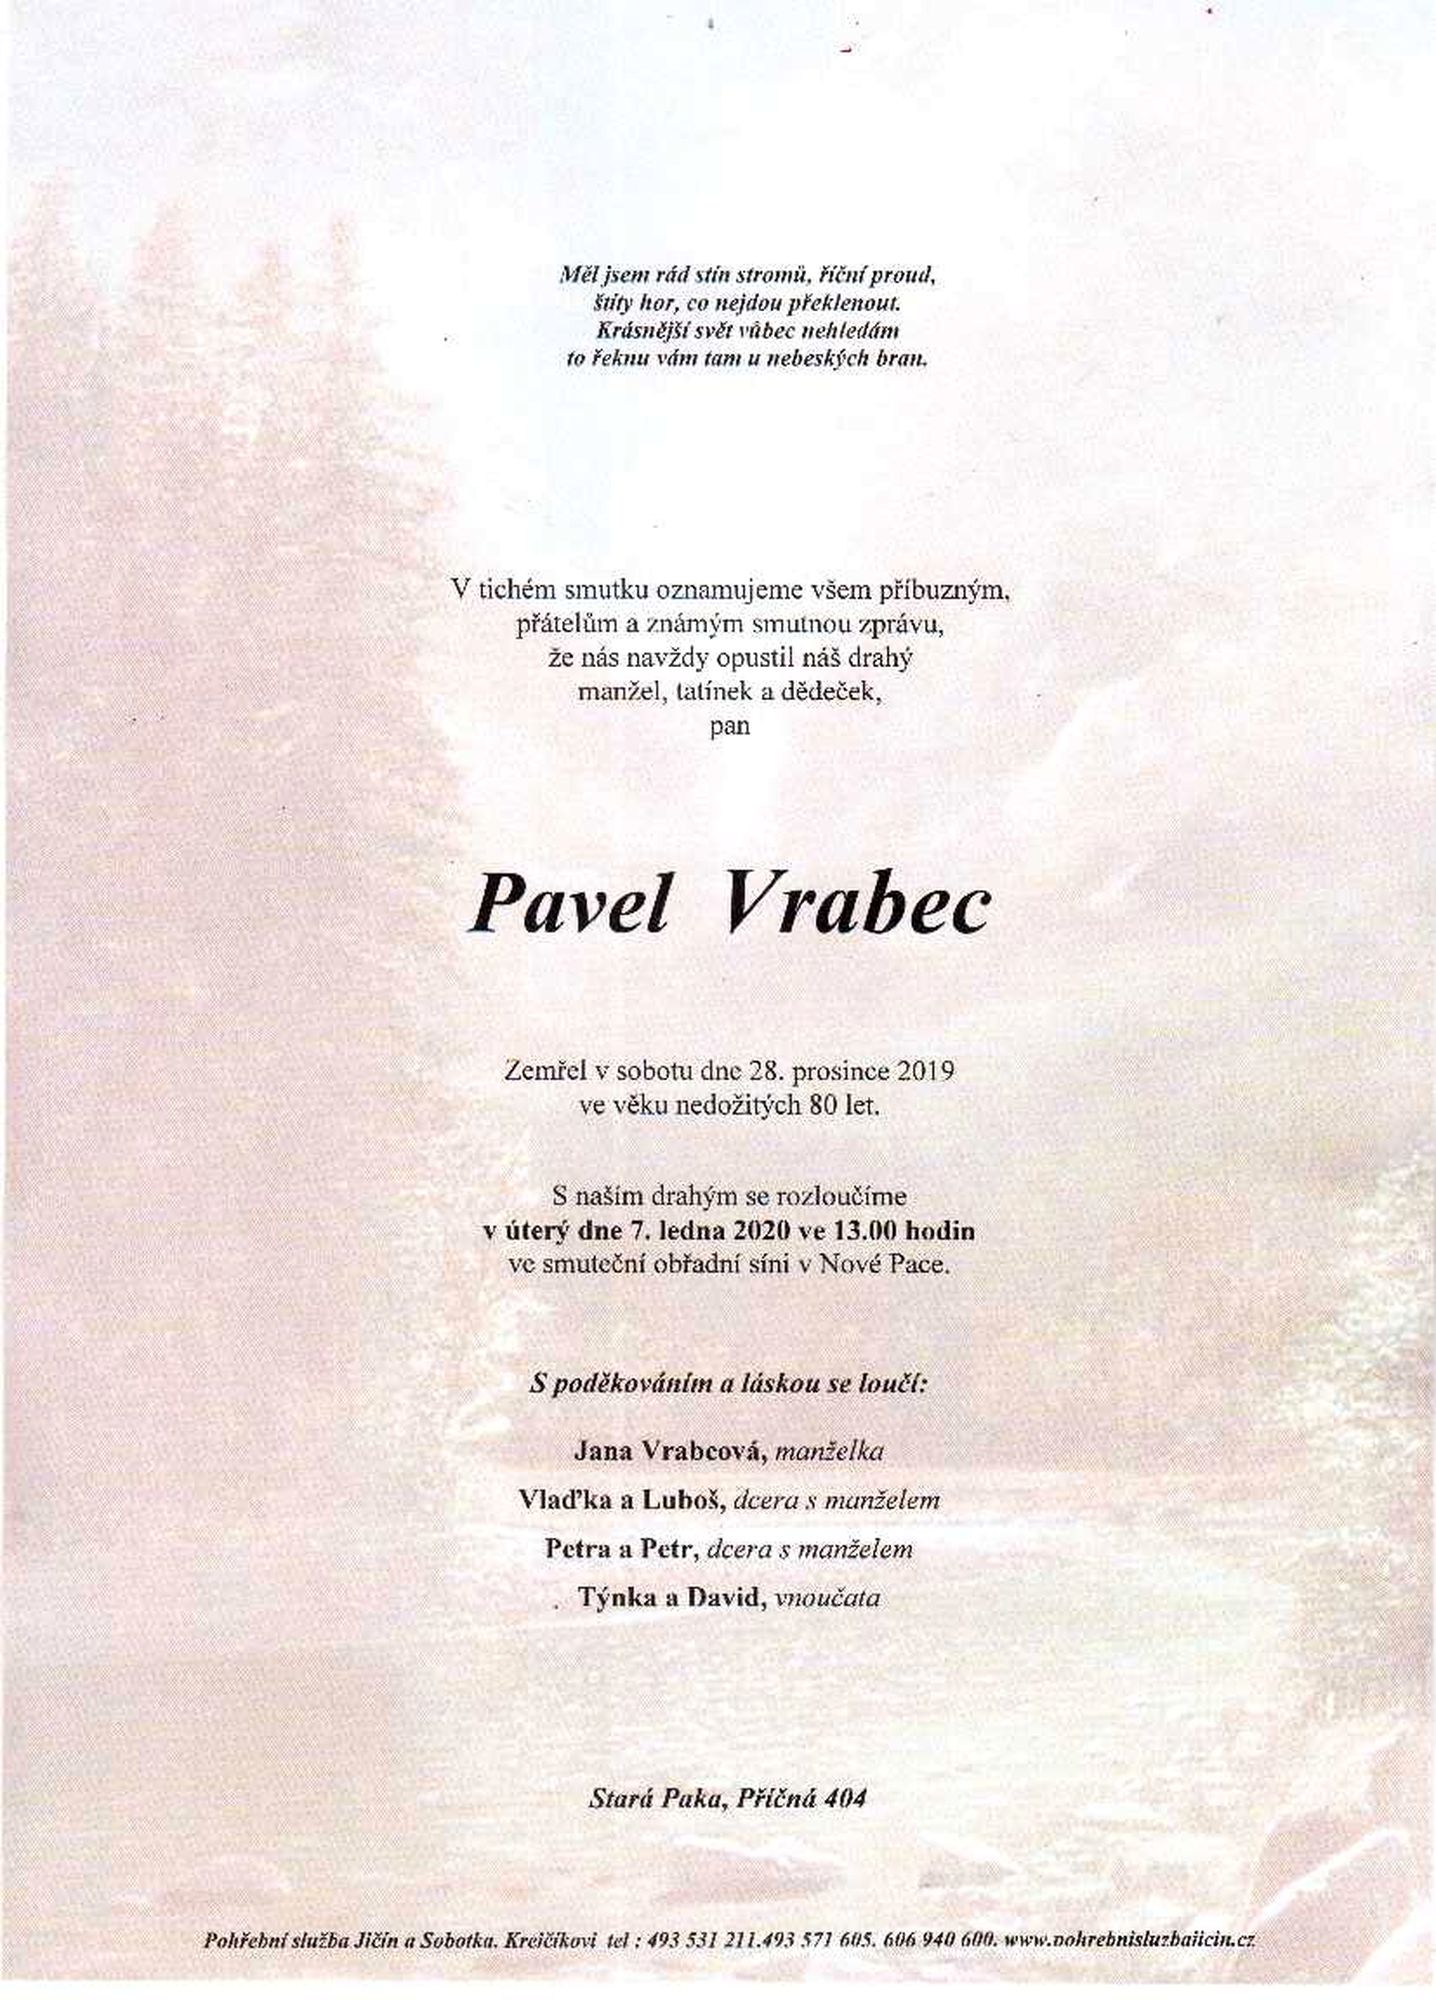 Pavel Vrabec